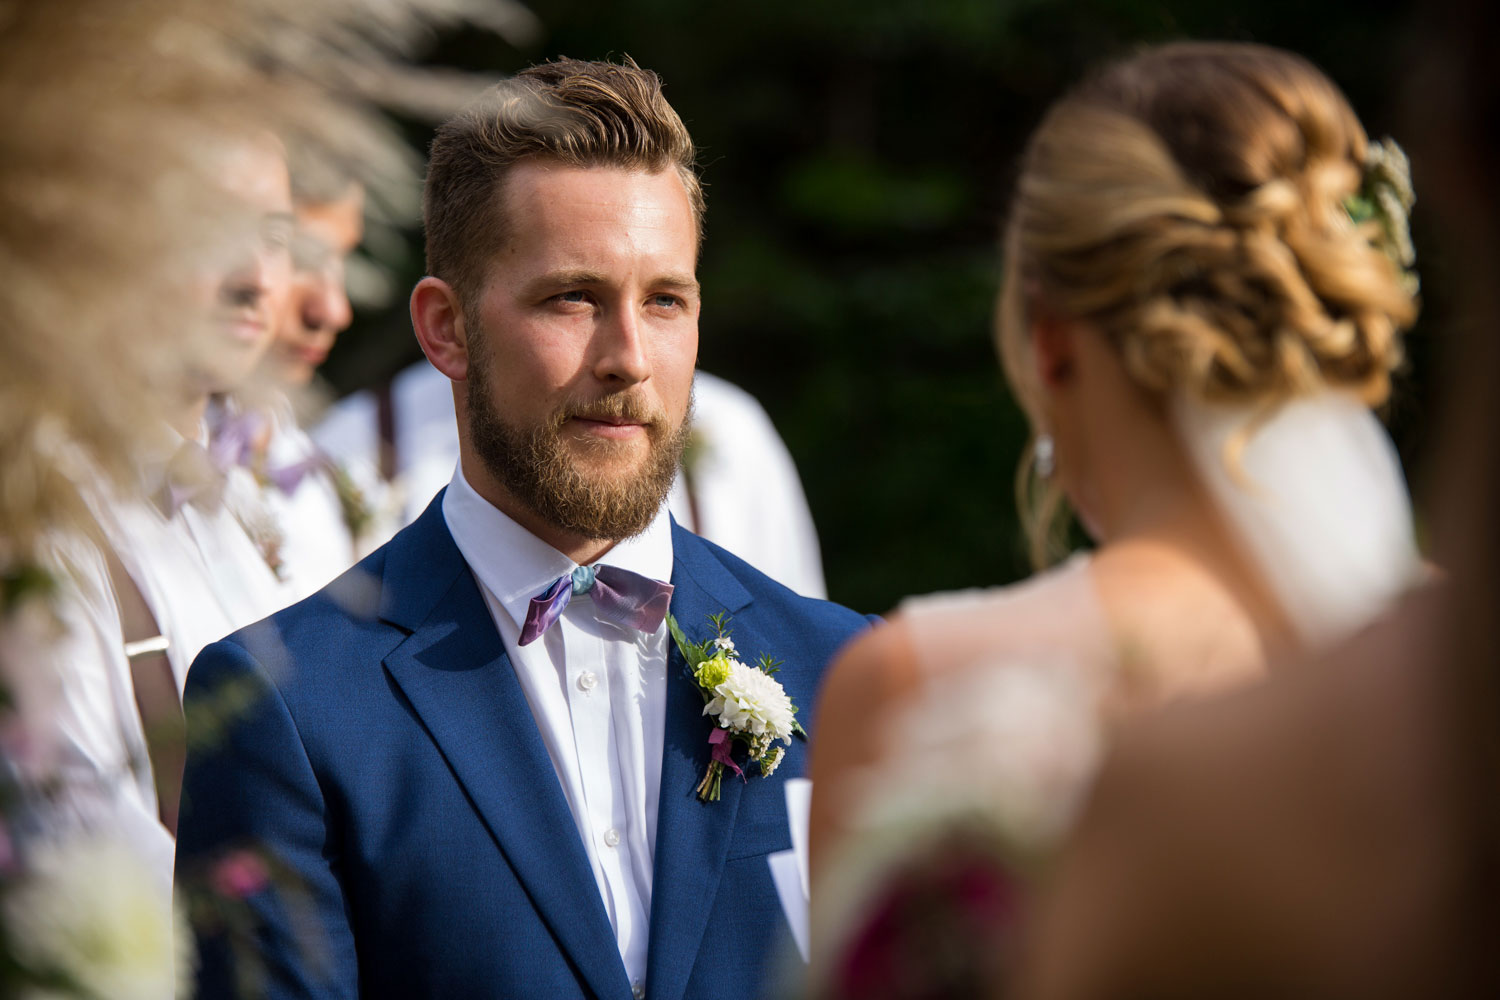 auckland wedding groom looking